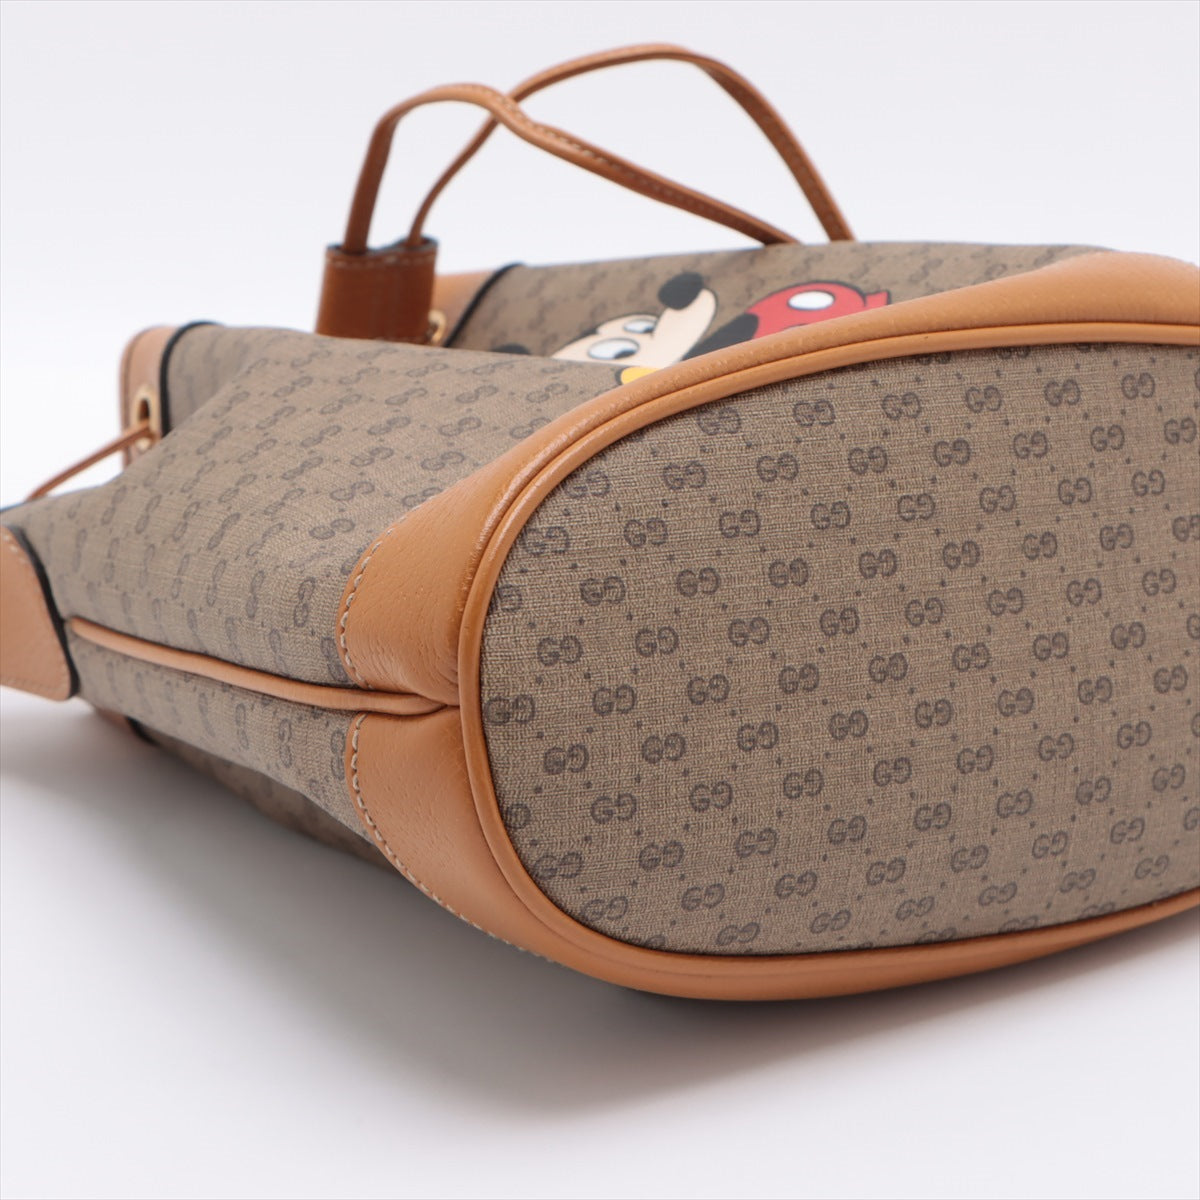 Gucci x Disney Mini GG Supreme Shoulder bag Beige 602691